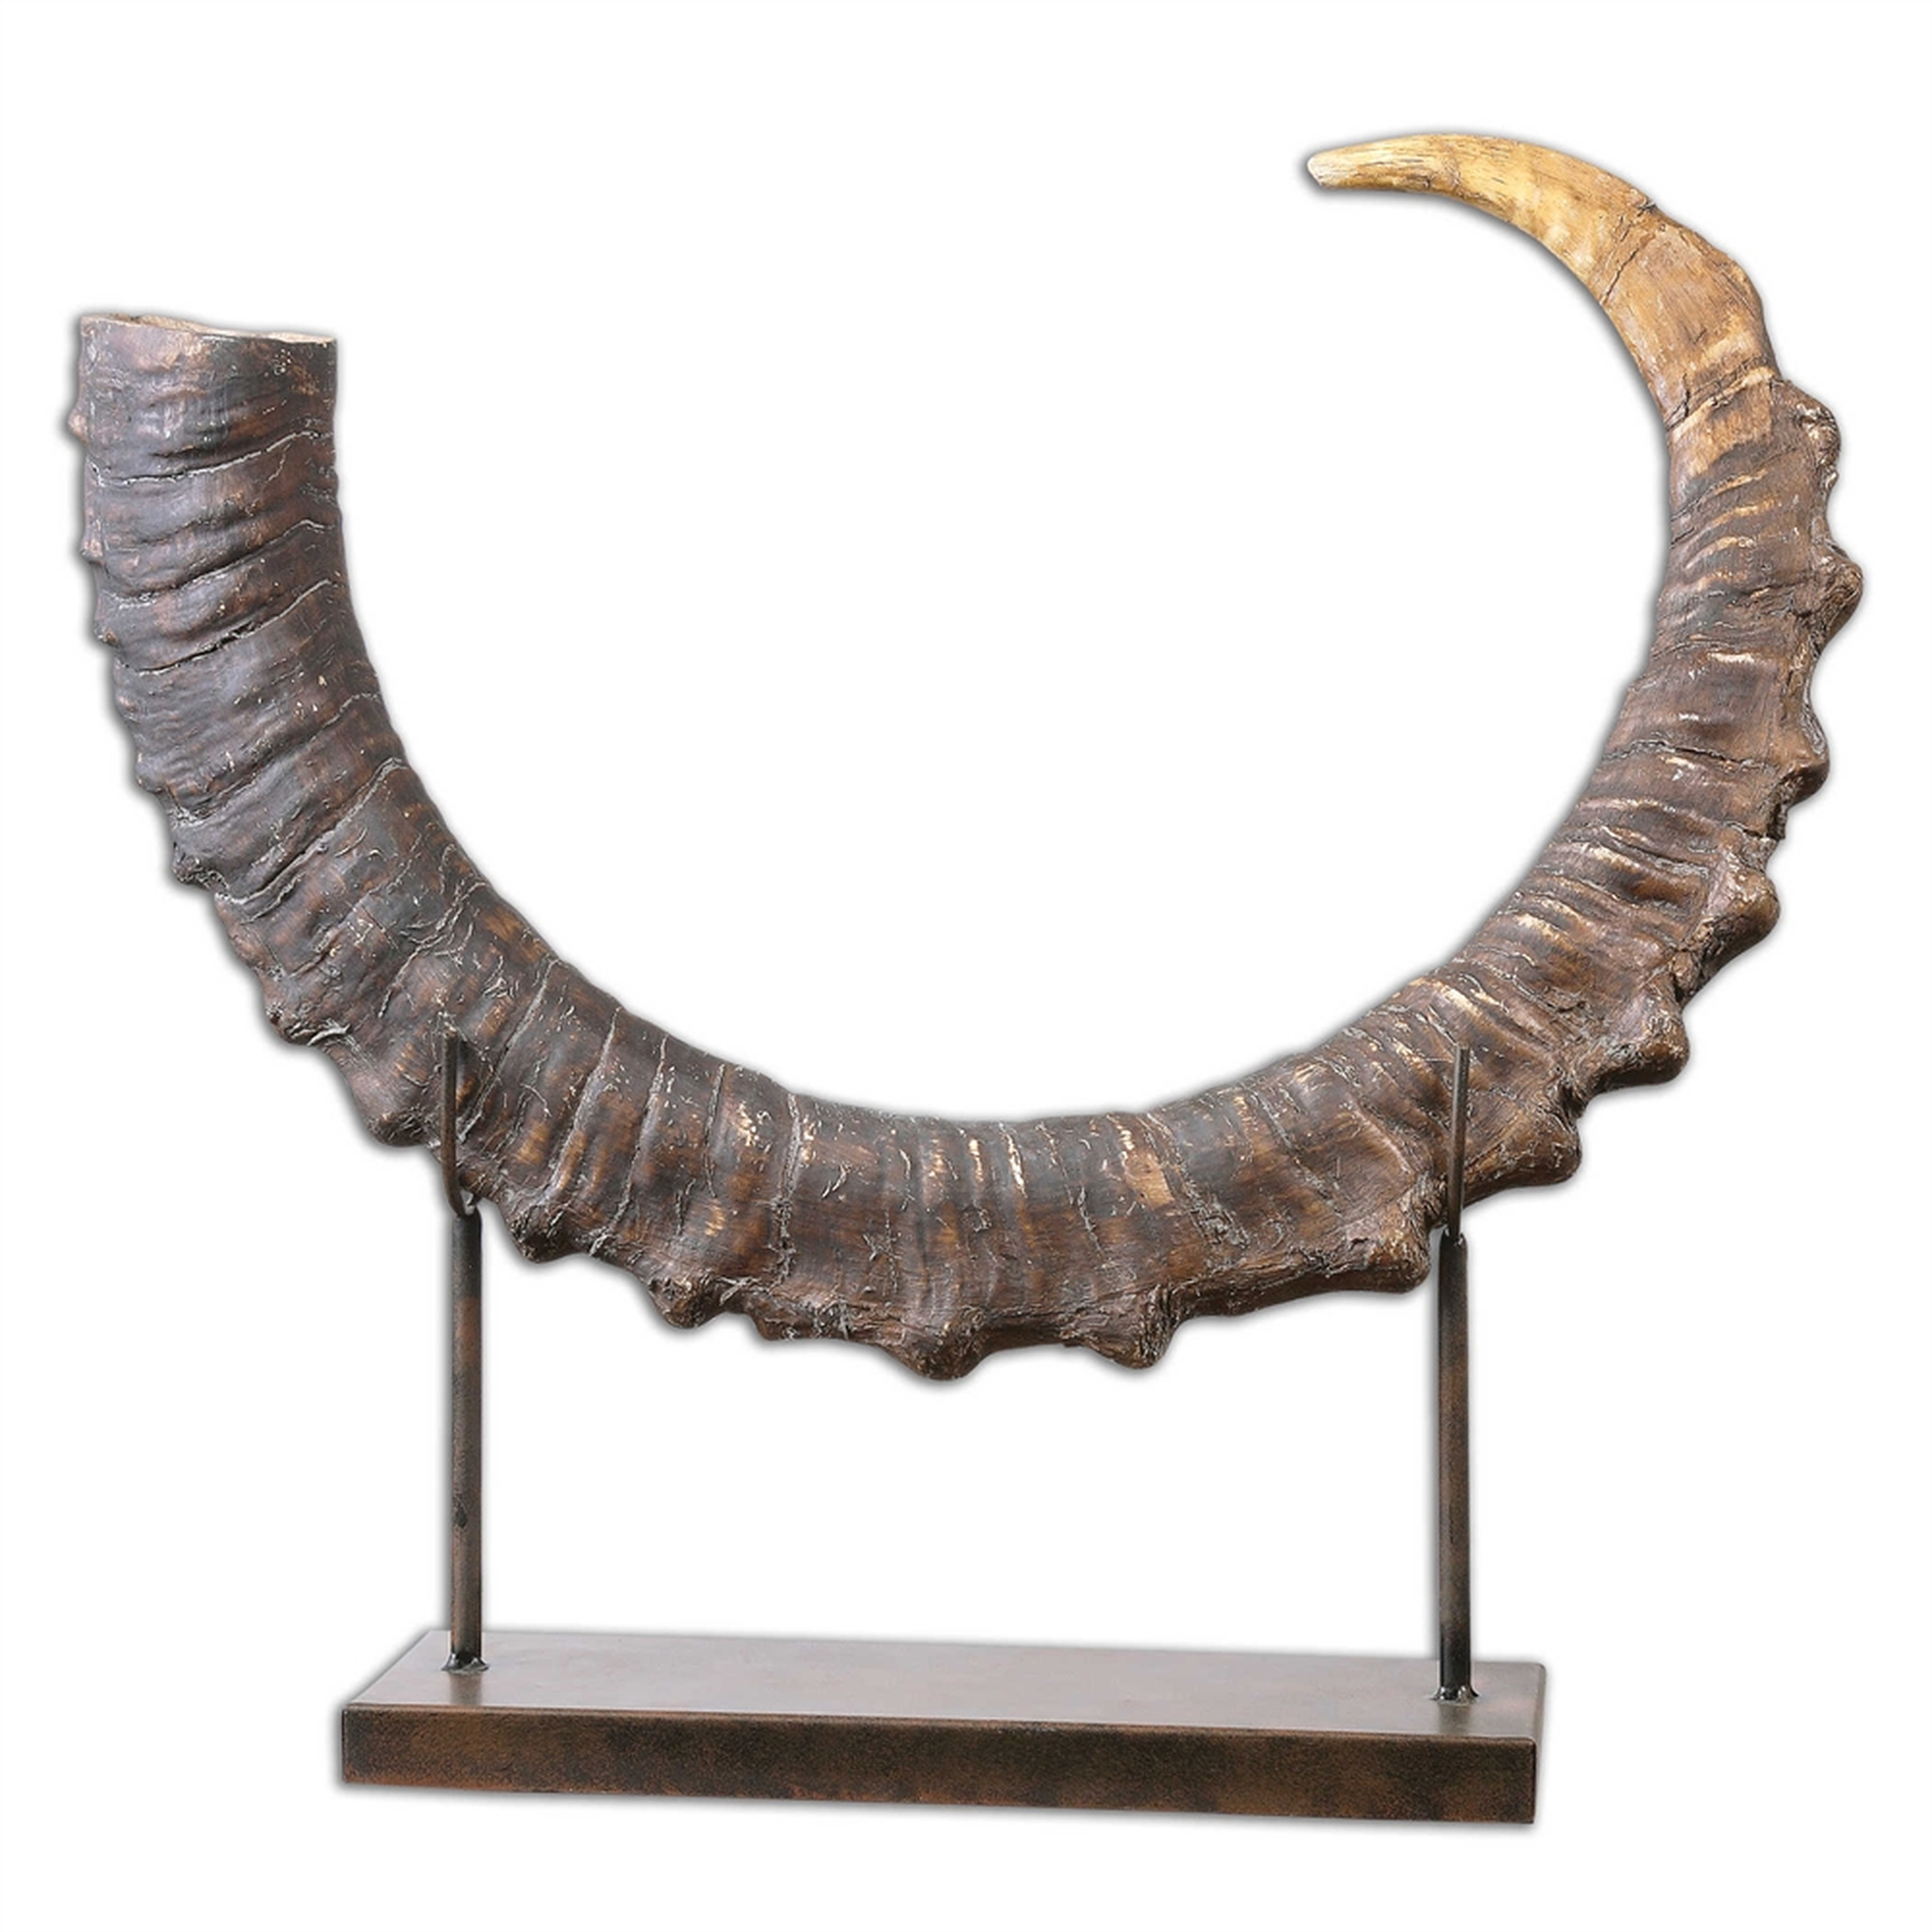 Sable Antelope Horn, Sculpture - Hudsonhill Foundry